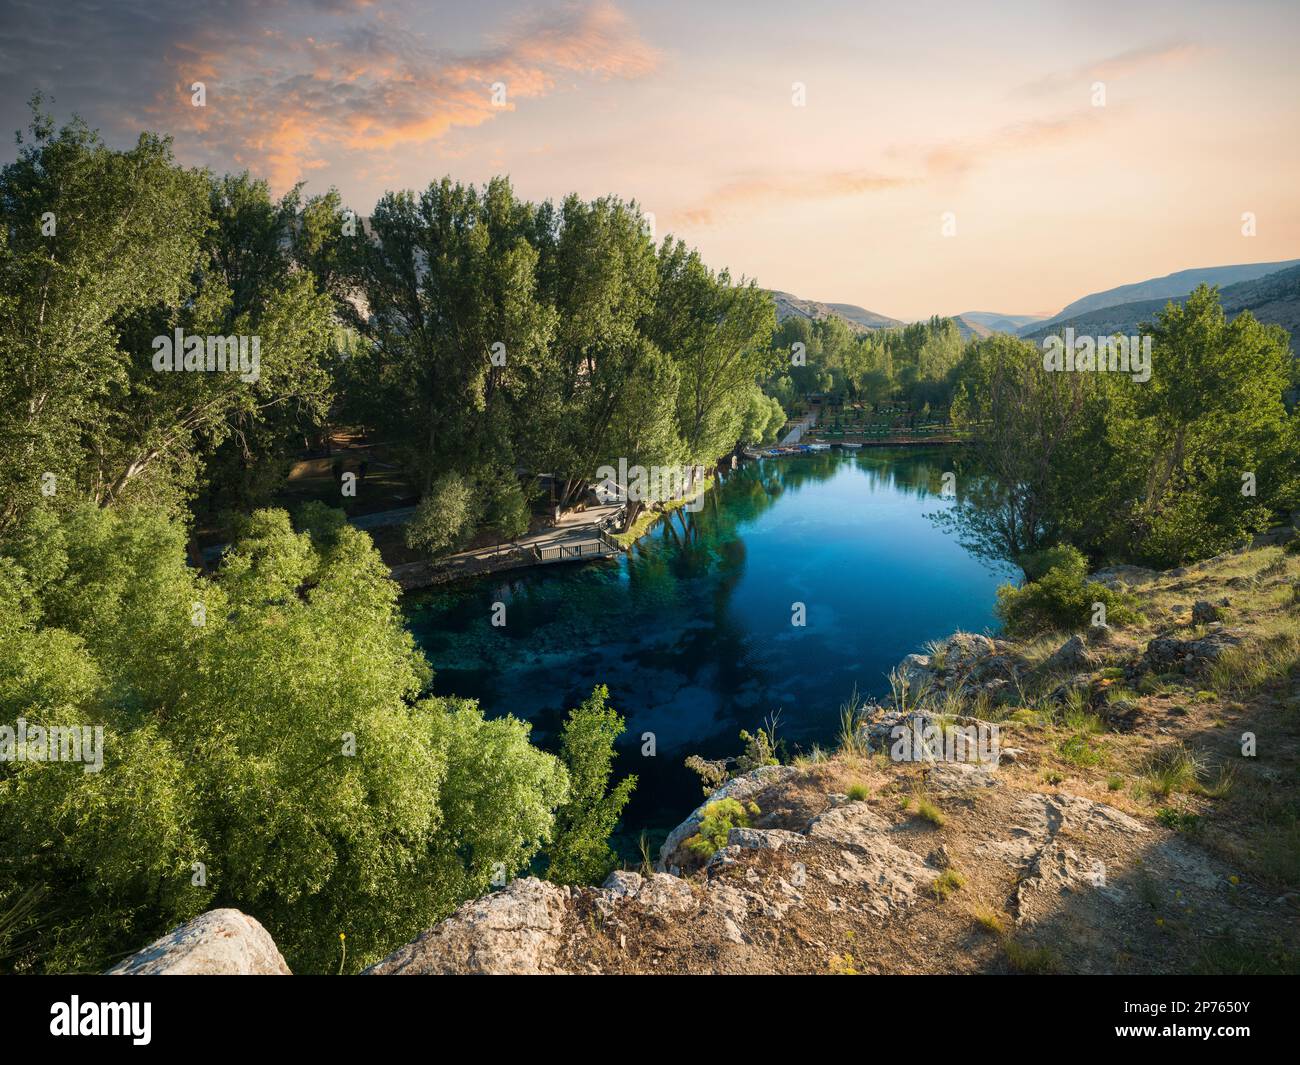 Morning view of the wonderful Gokpinar lake in Gurun district. Turkey's lake. Sivas city, Turkey Stock Photo